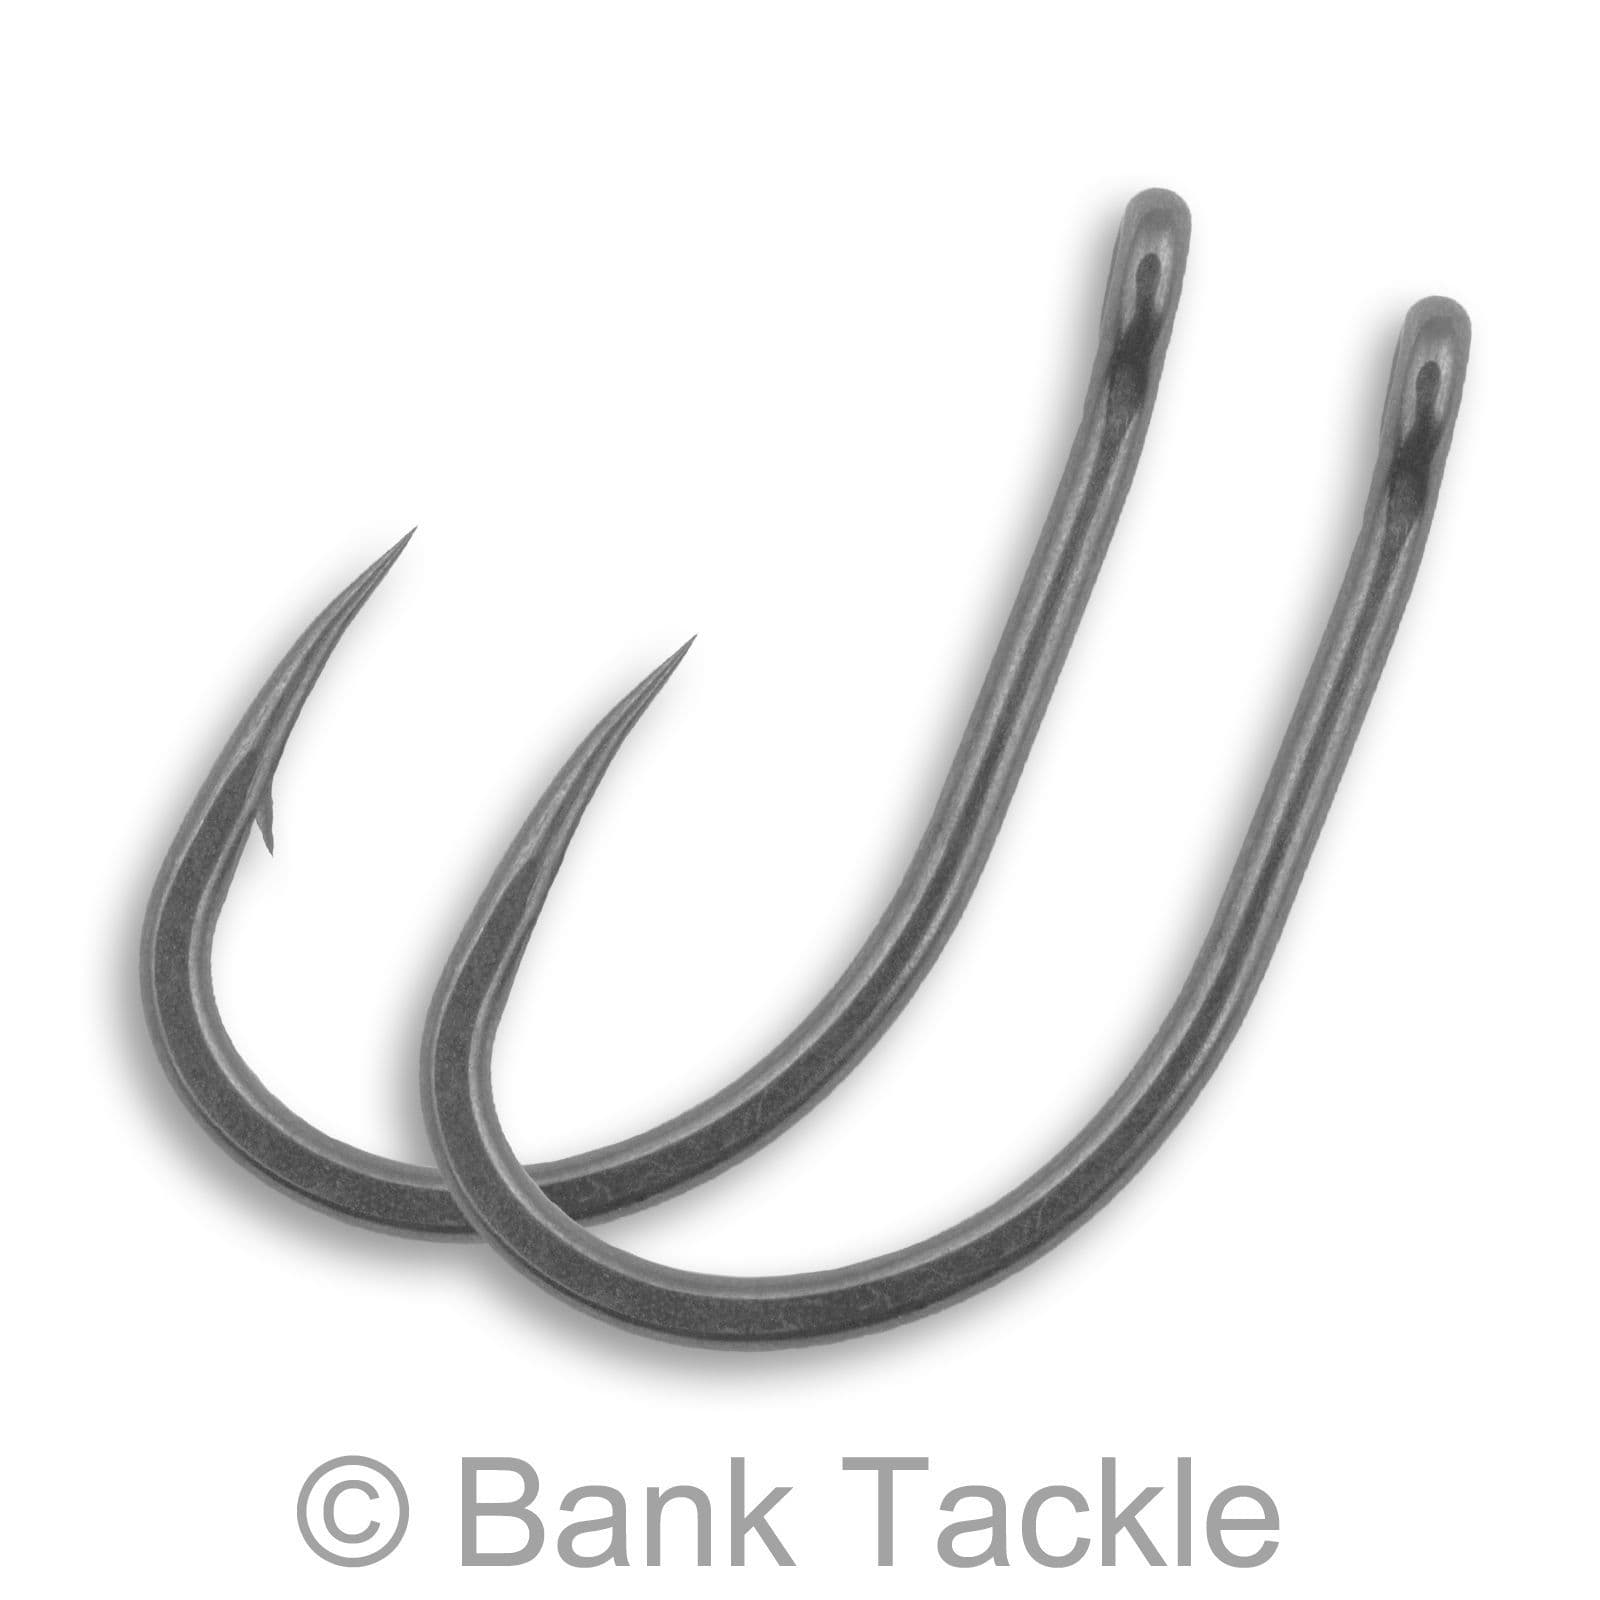 Bank Tackle new hook range  Barbel Fishing World Forums